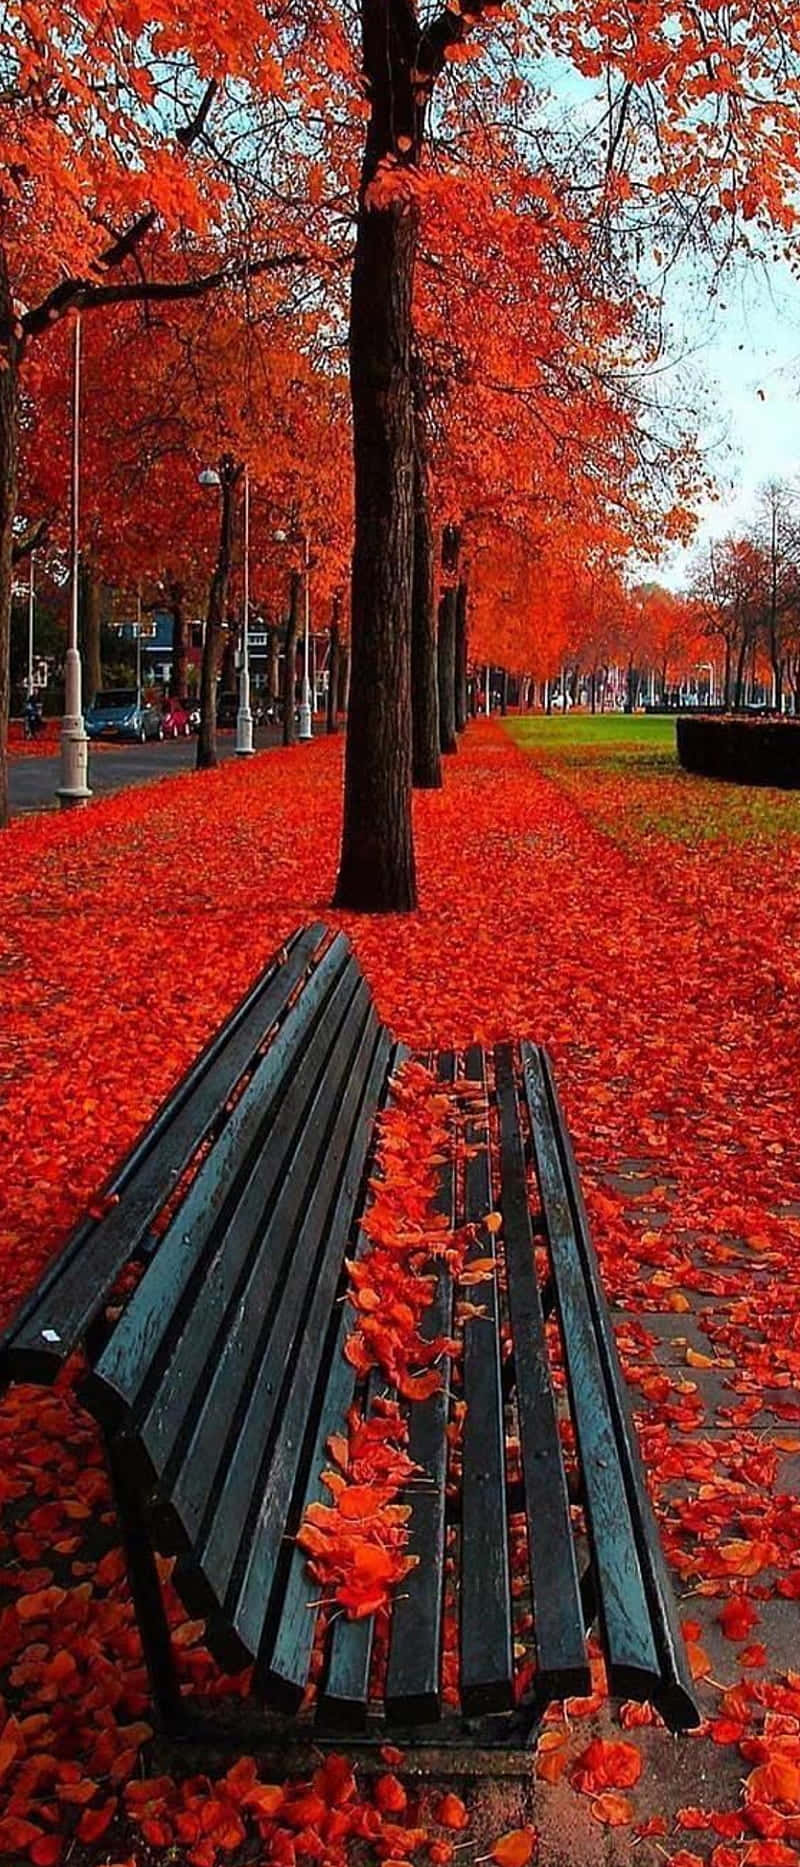 "Autumn Awe - Enjoy the beauty of fall"